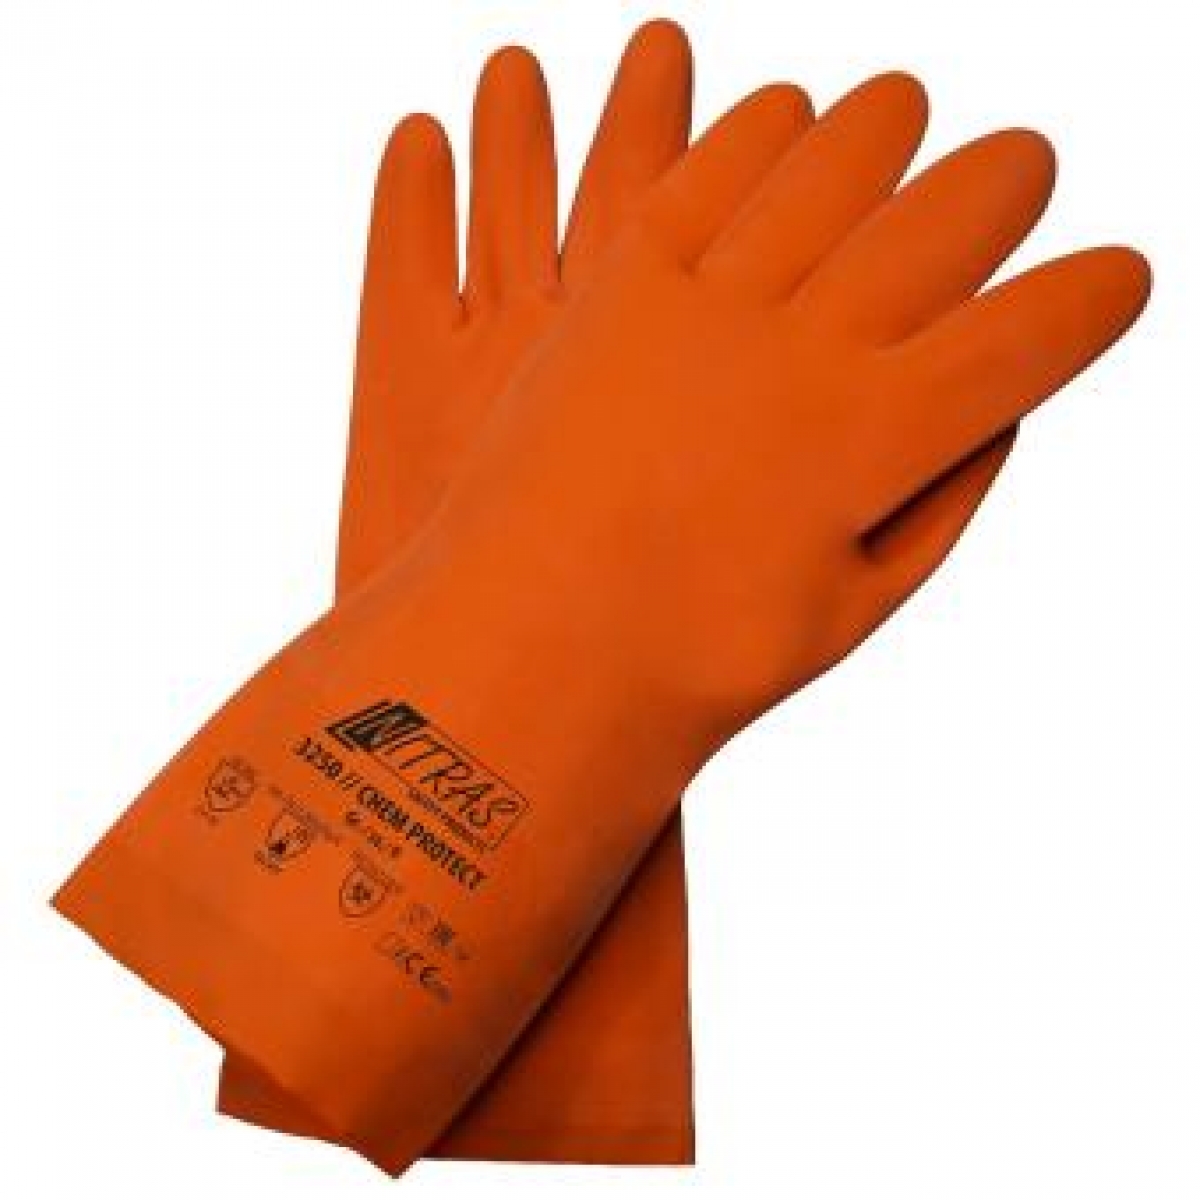 NITRAS CHEM PROTECT, Chemikalienschutzhandschuhe, Latex, orange, VE = 12 Paar